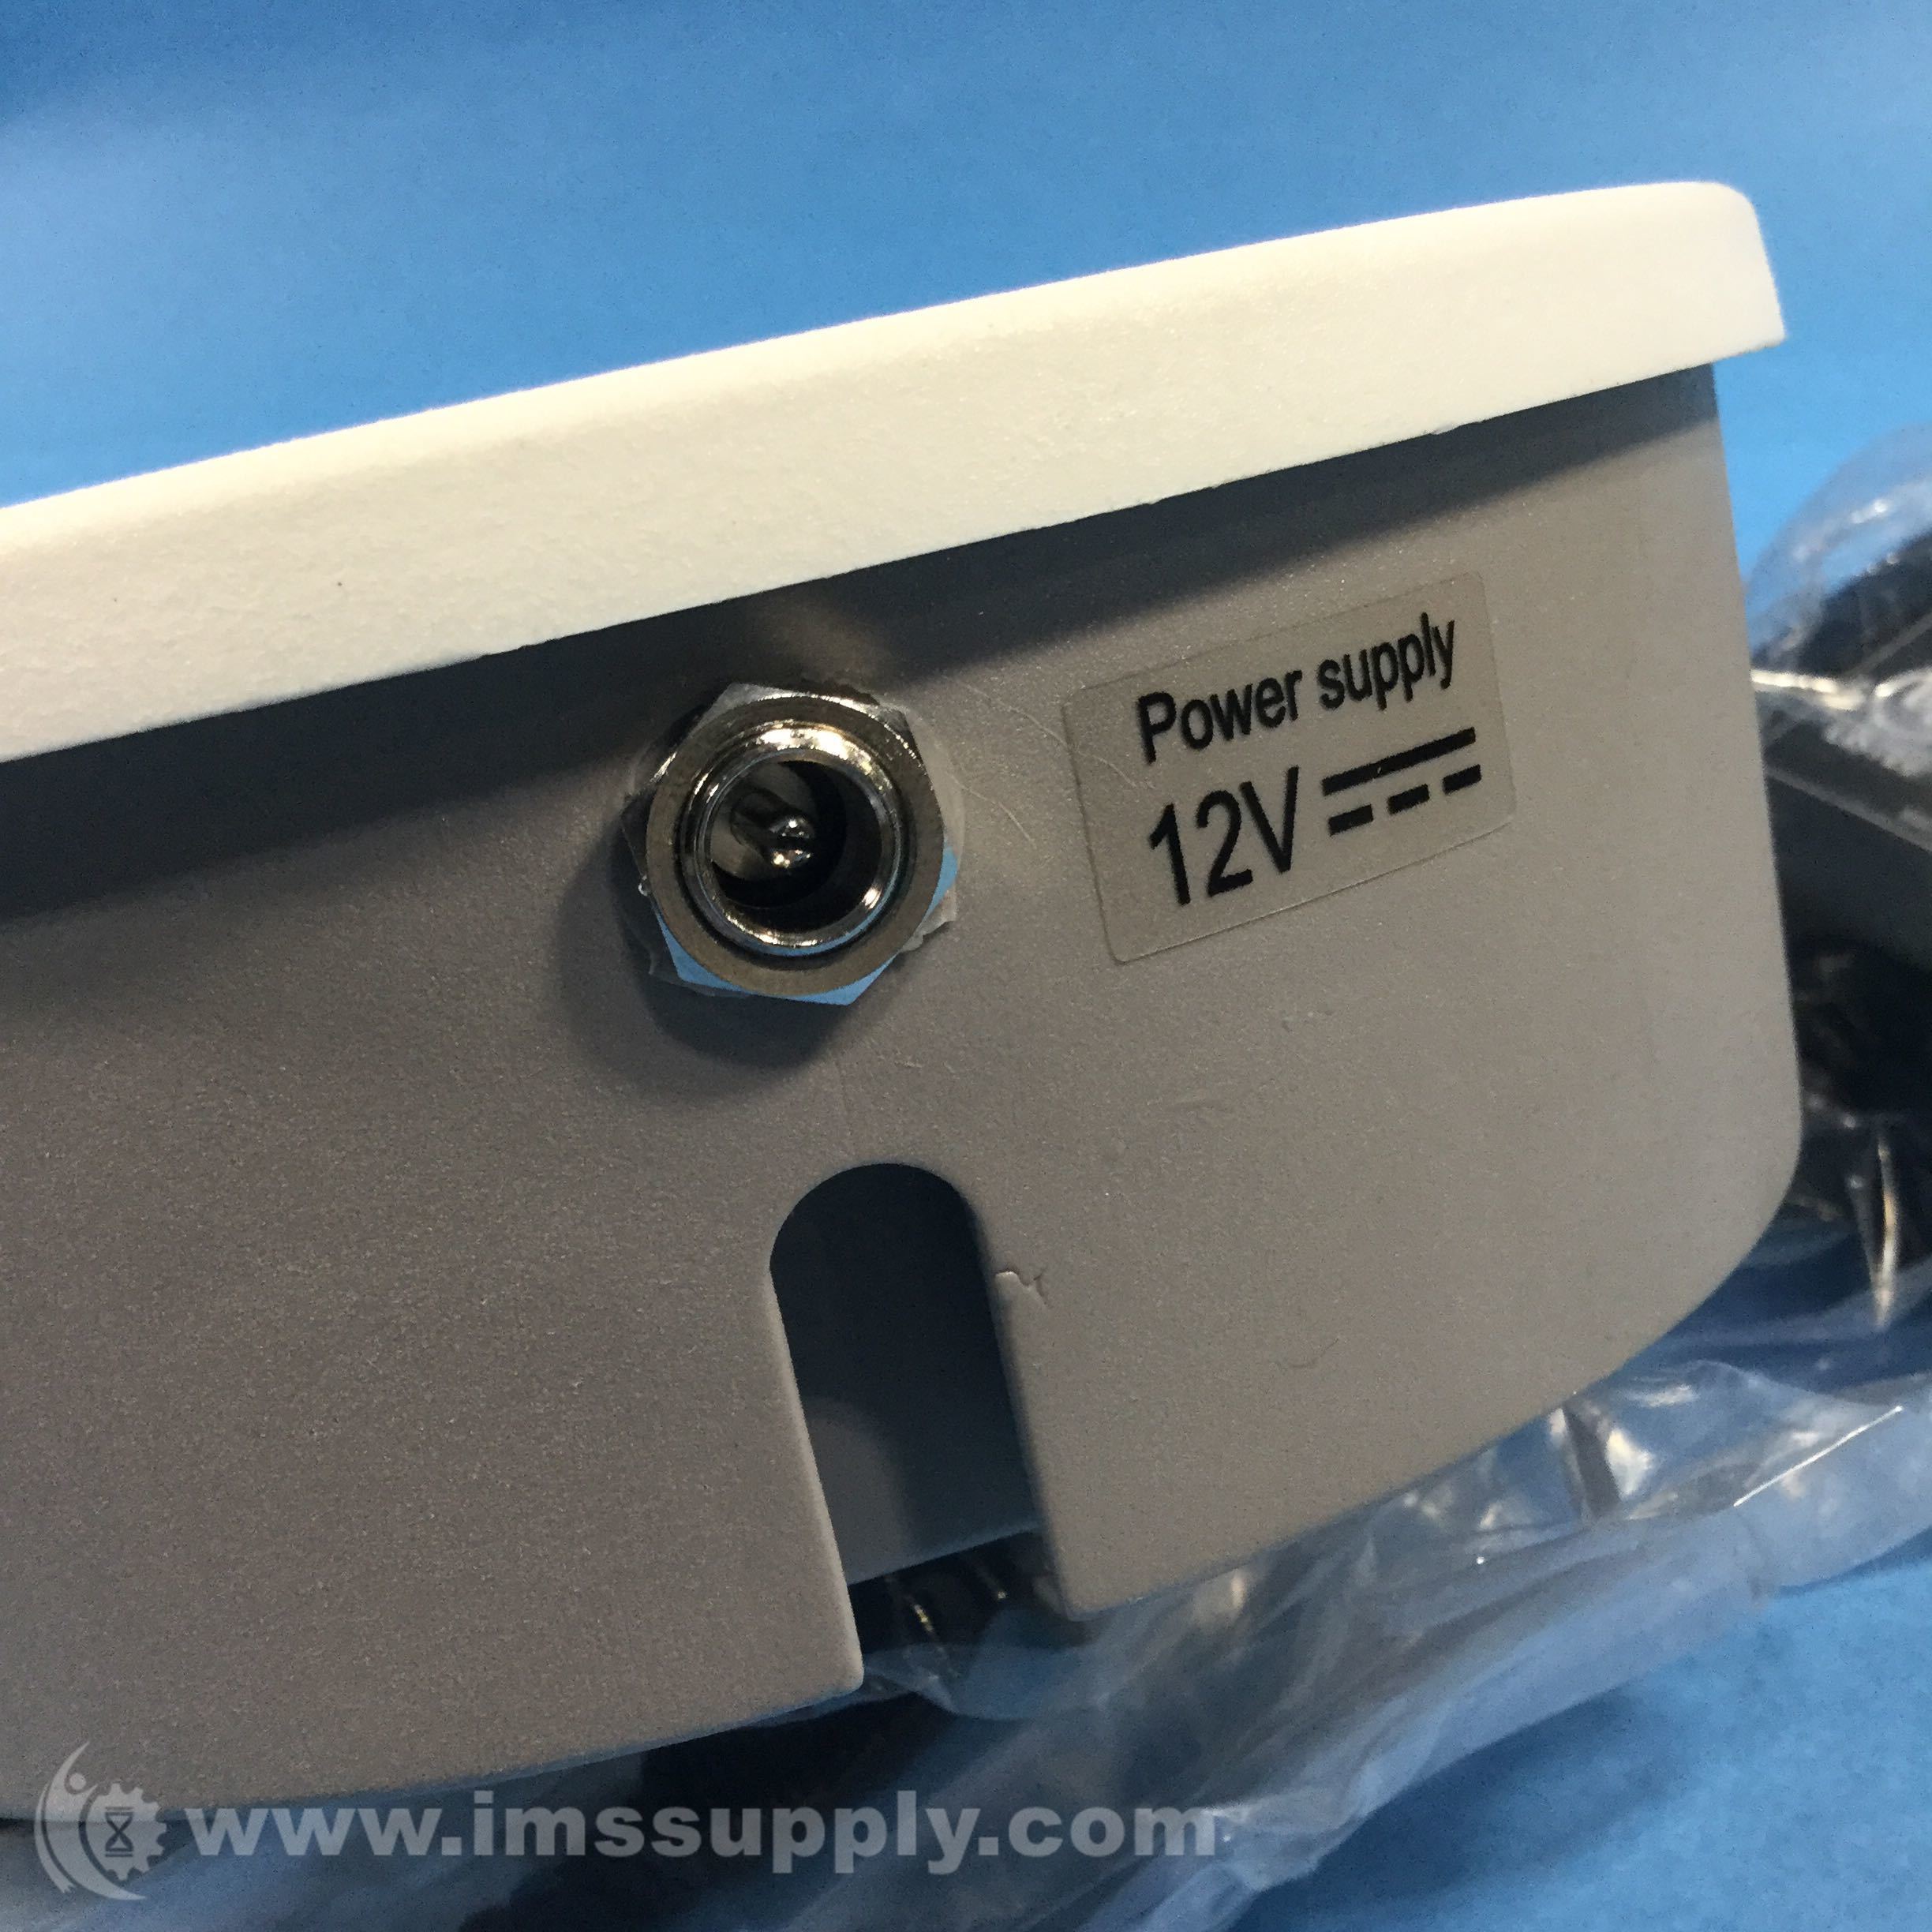 VELP Scientifica F203A0160 Low-Profile Magnetic Stirrer, Gray